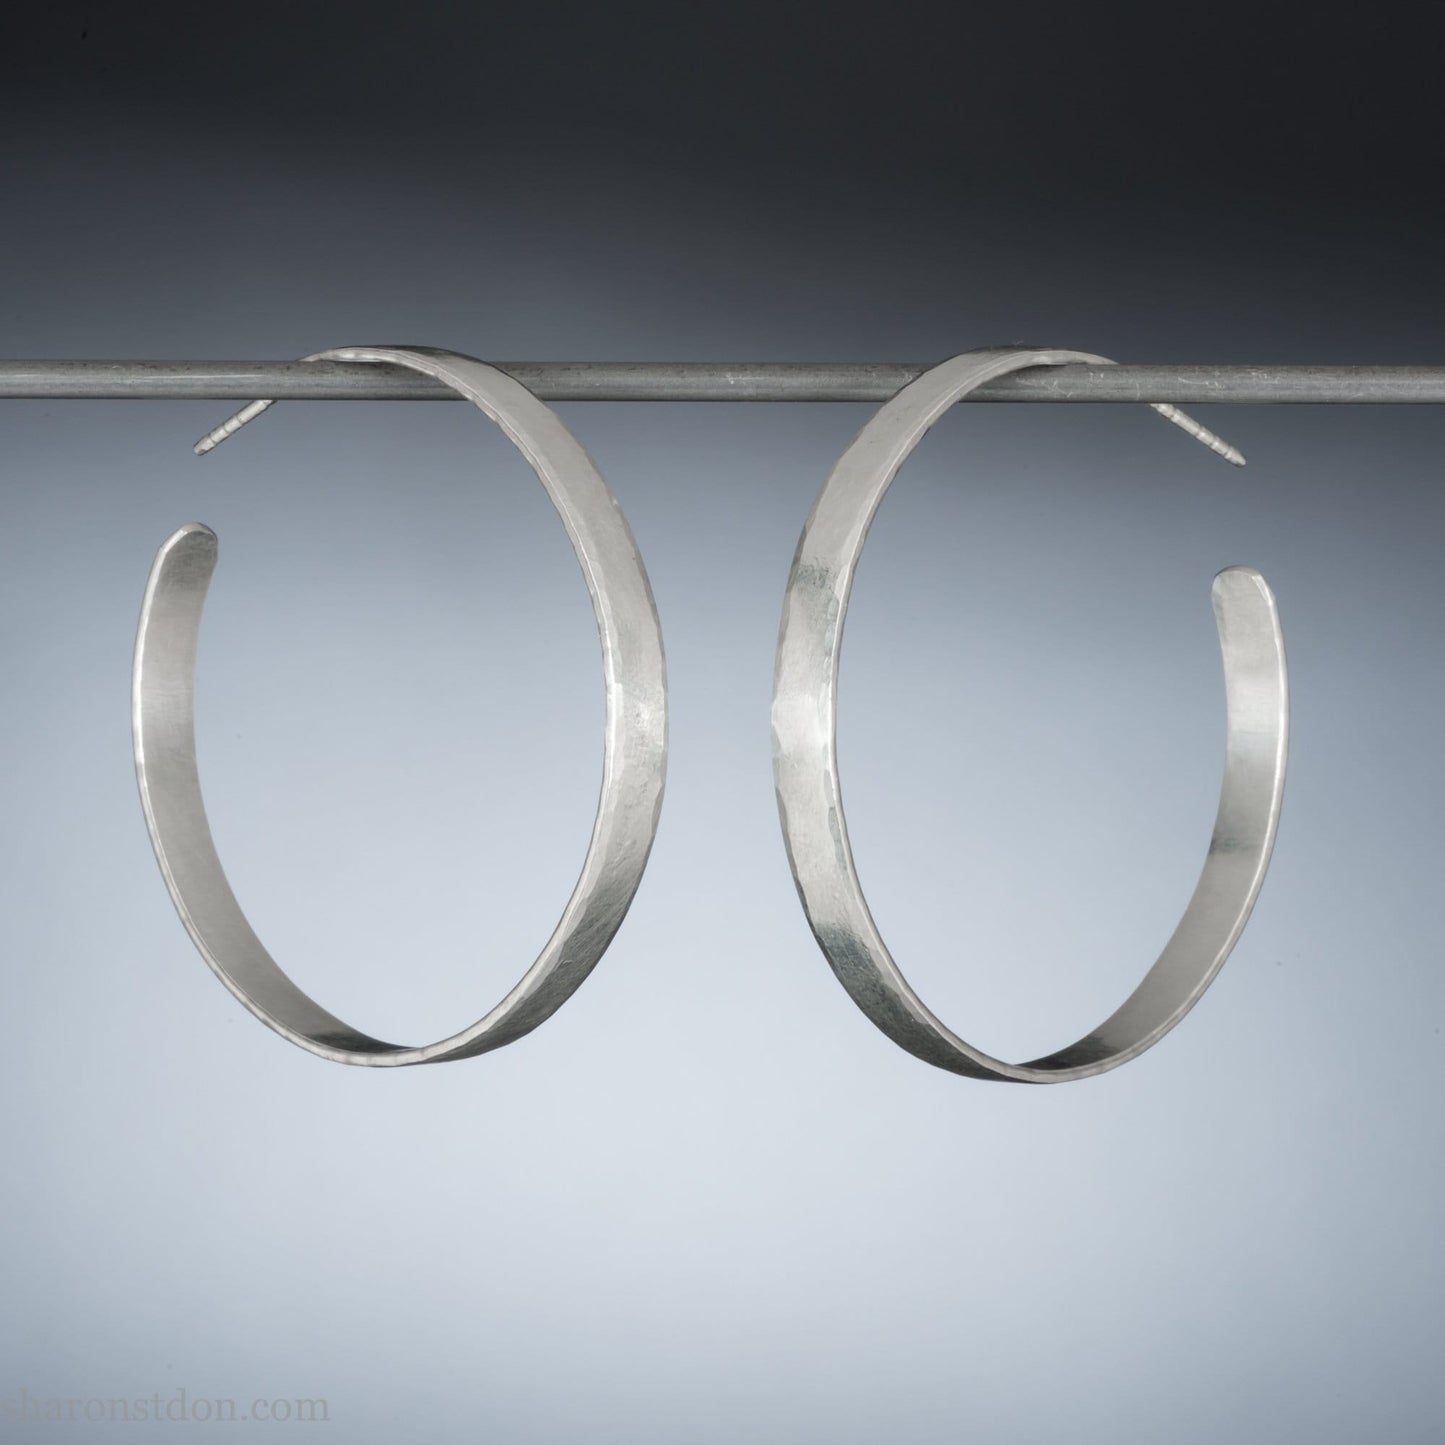 Handmade 925 sterling silver hoop earrings. Comfortable, lightweight, daily wear earrings made by Sharon SaintDon in North America.